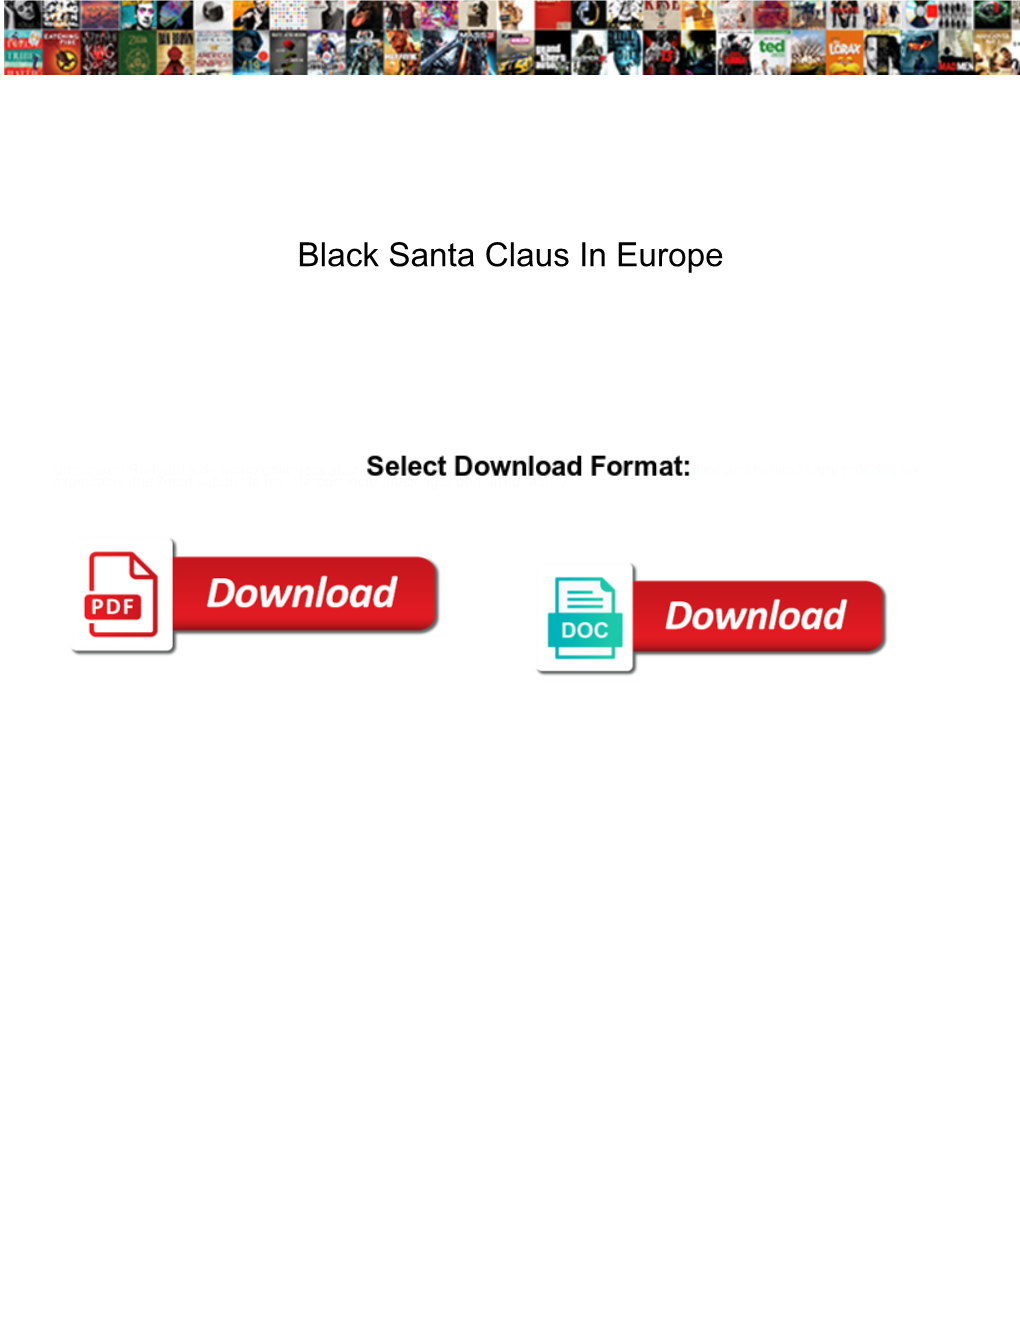 Black Santa Claus in Europe